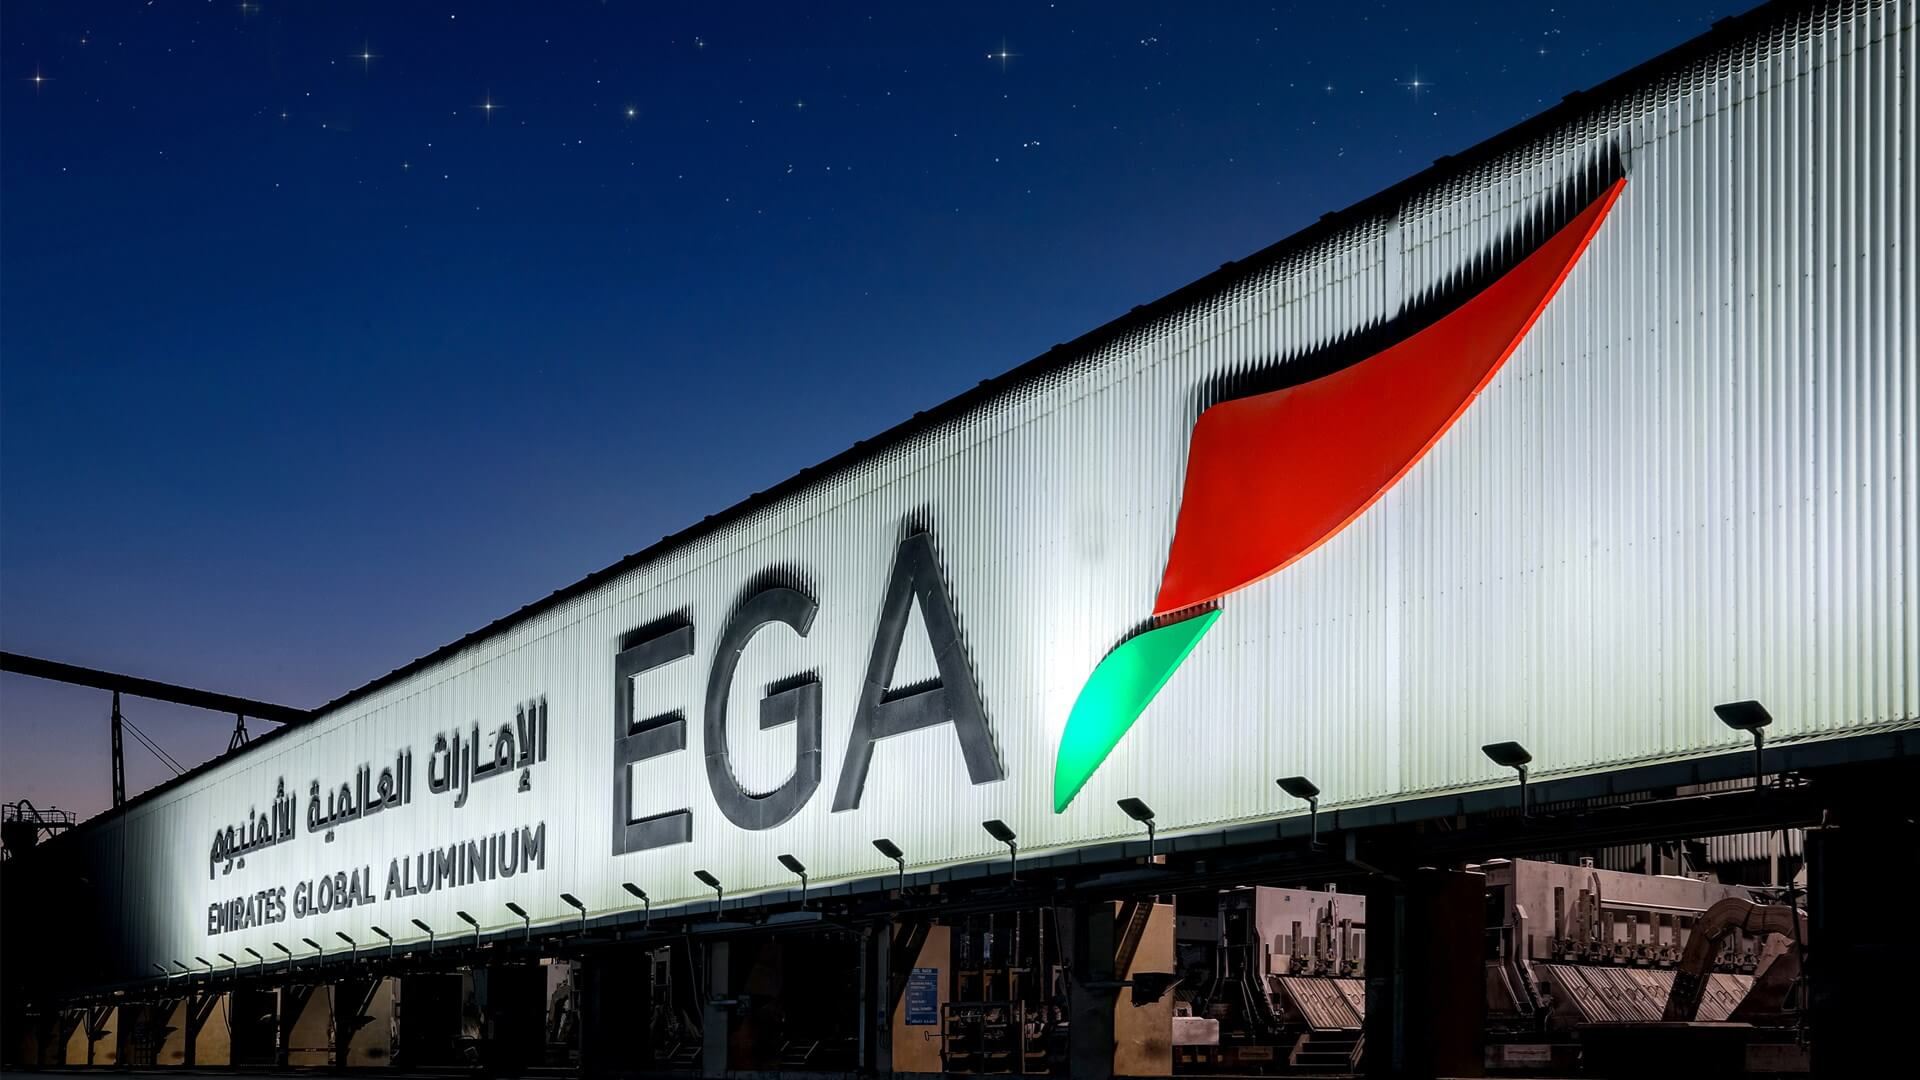 Emirates Global Aluminium (EGA) takes lead in sustainable shipping